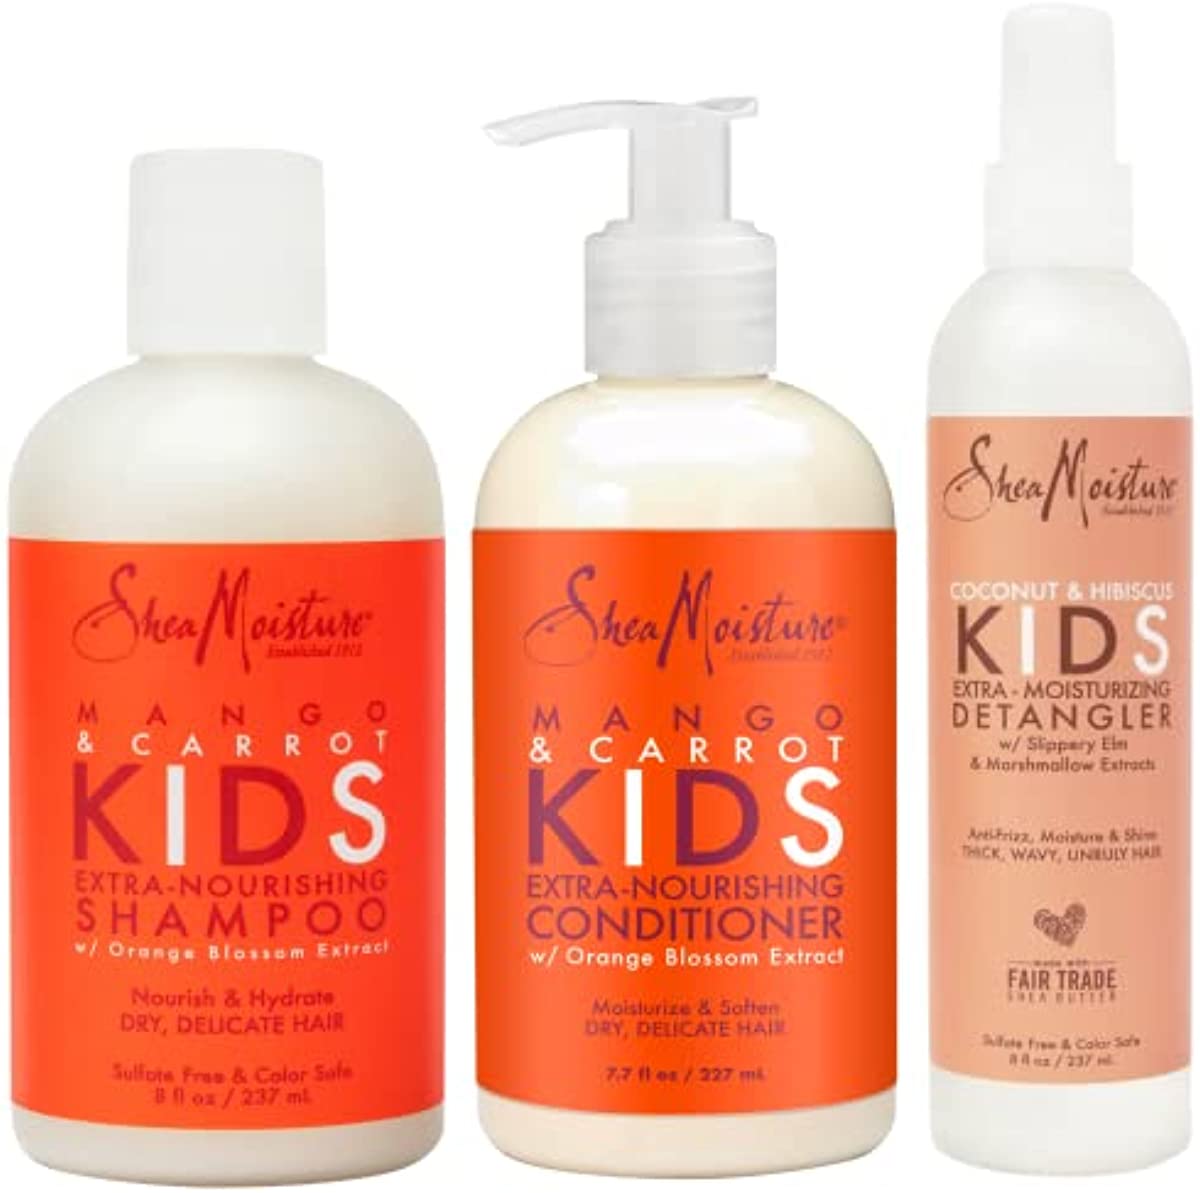 Shea Moisture Kids Hair Care Combination Pack – Includes Mango & Carrot 8oz KIDS Extra-Nourishing Shampoo, 8oz KIDS Extra-Nourishing Conditioner, and 8oz Coconut & Hibiscus KIDS Detangler